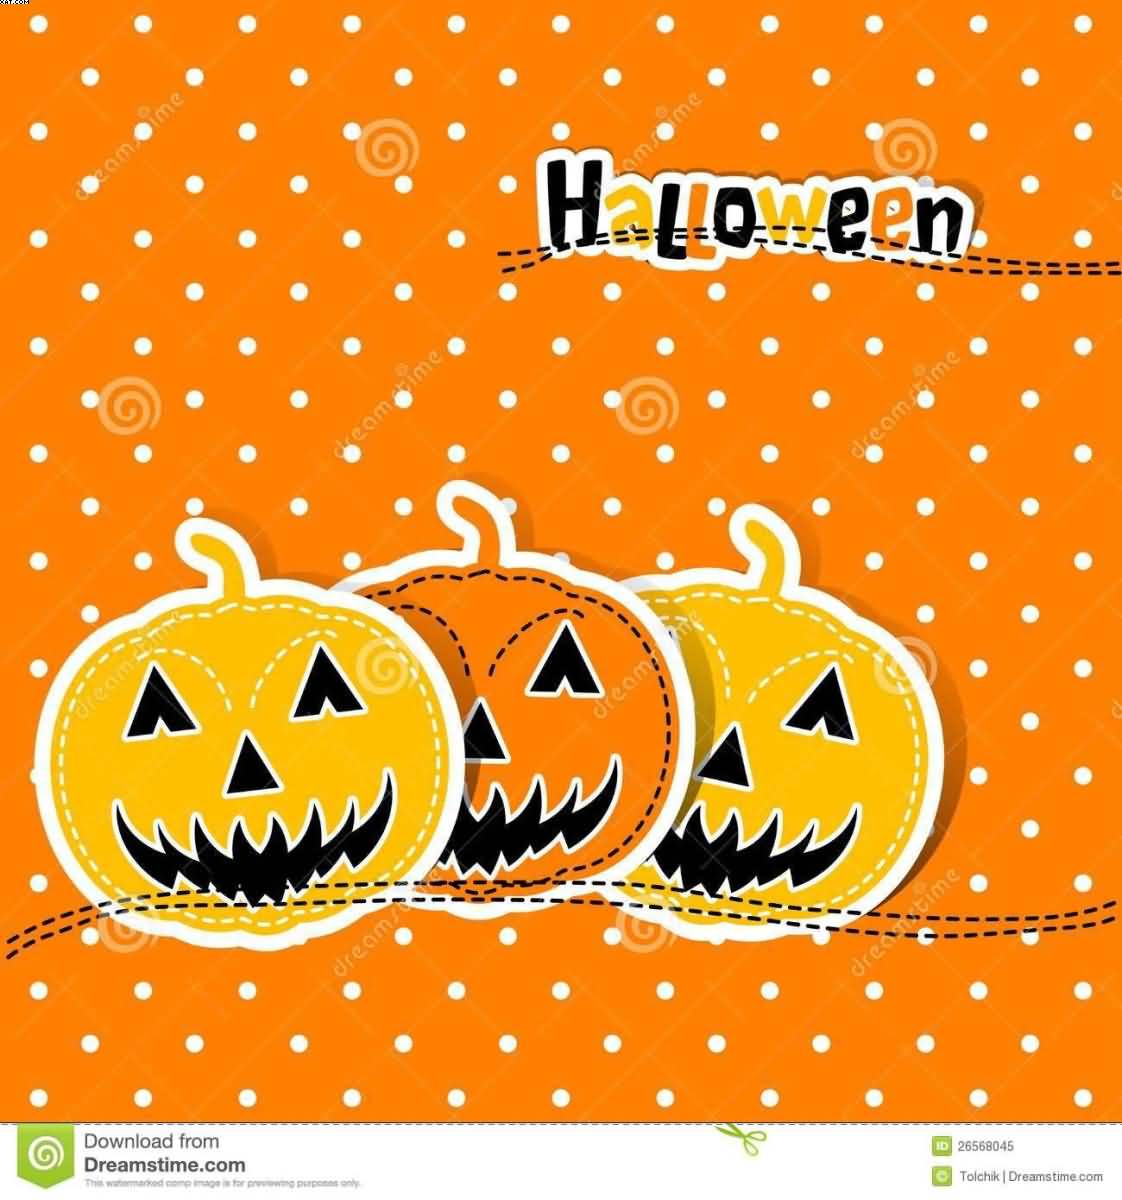 Halloween Wishes Card Pumpkins image